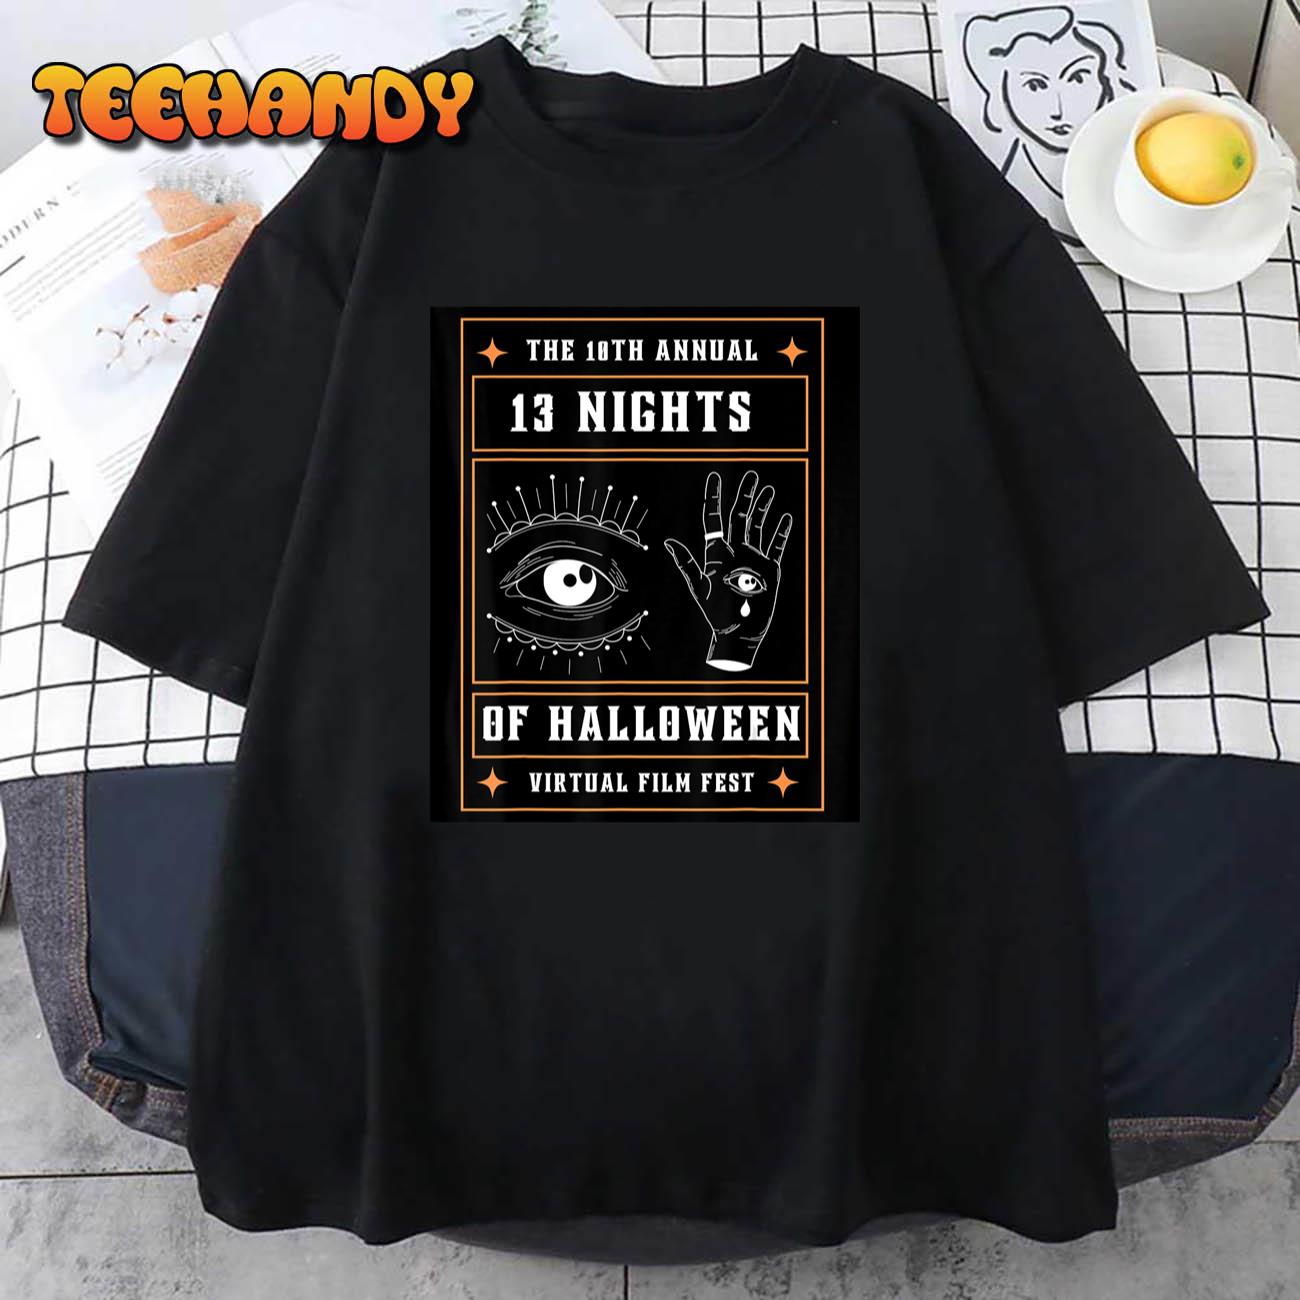 10th Annual 13 Nights of Halloween Virtual Film Fest T-Shirt